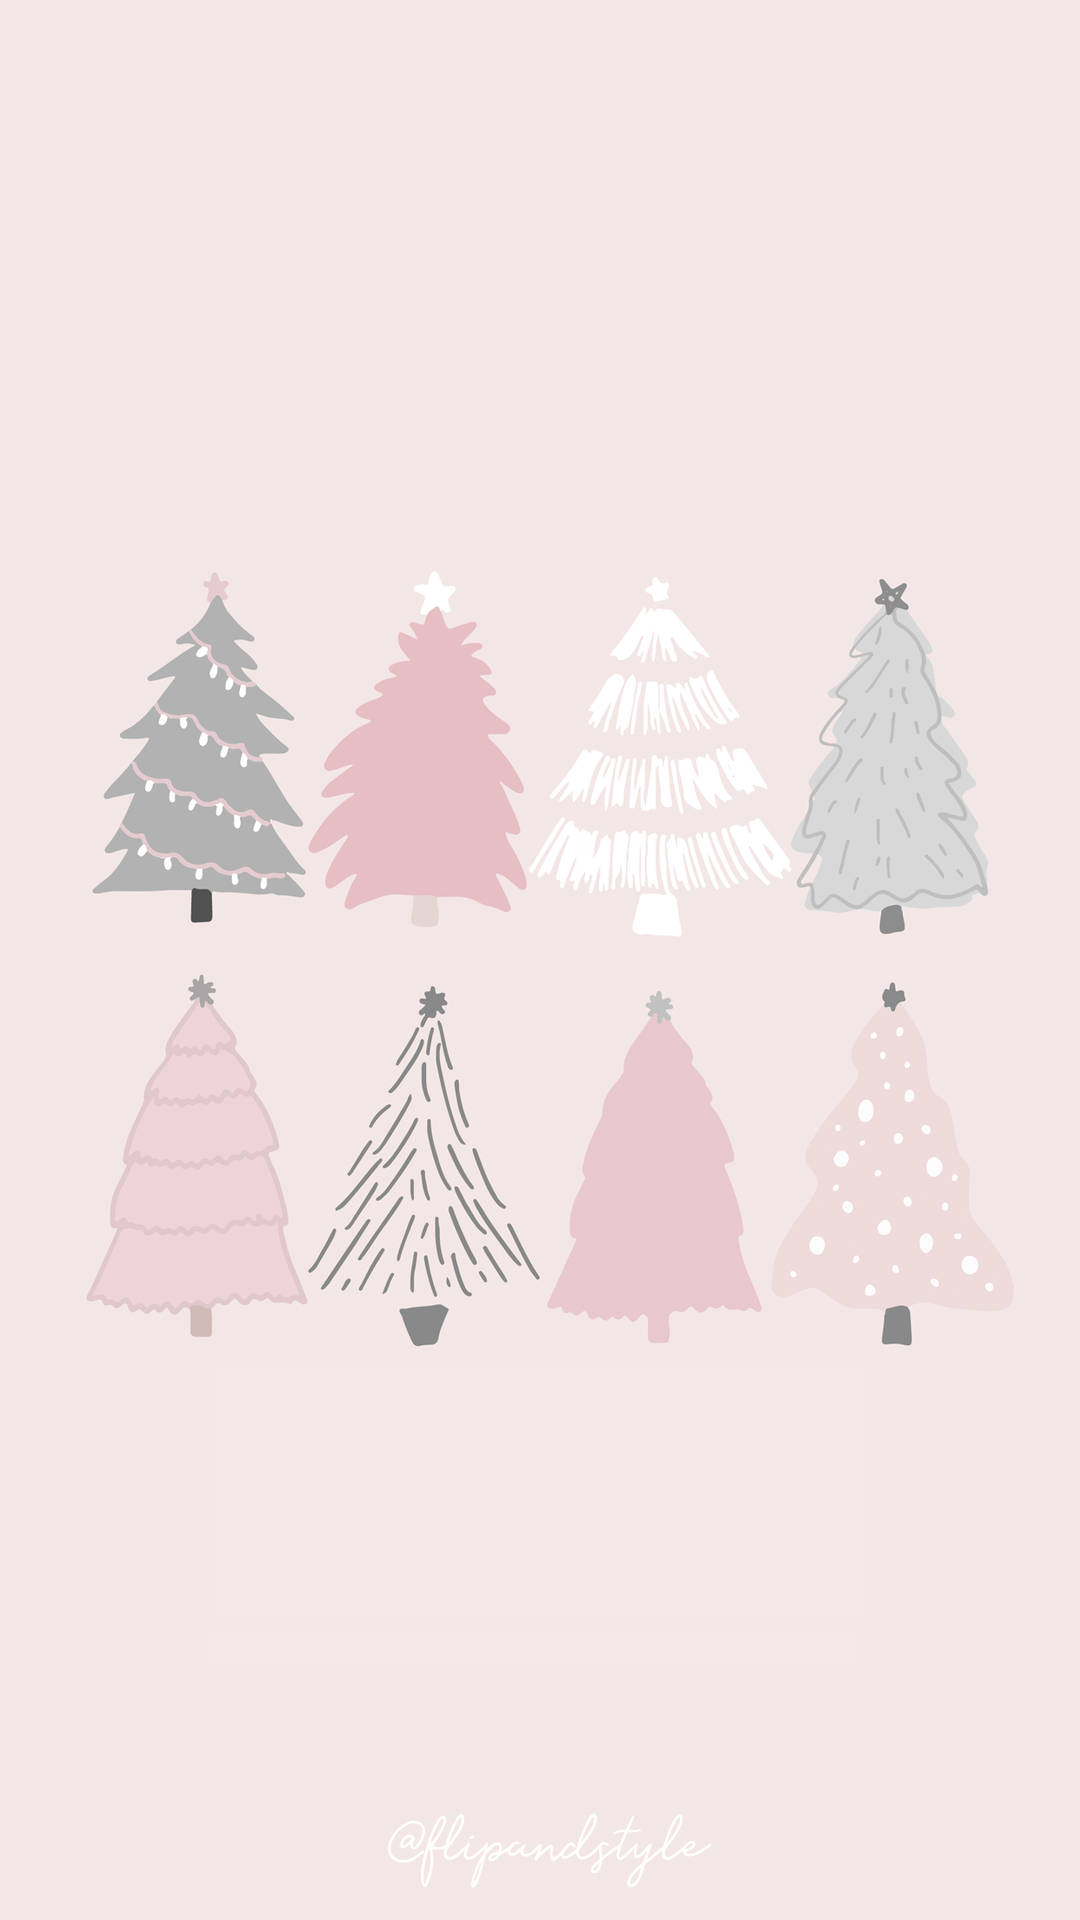 10 Cute Christmas Wallpaper Ideas for Phones  Hanging Sweets  Idea  Wallpapers  iPhone WallpapersColor Schemes